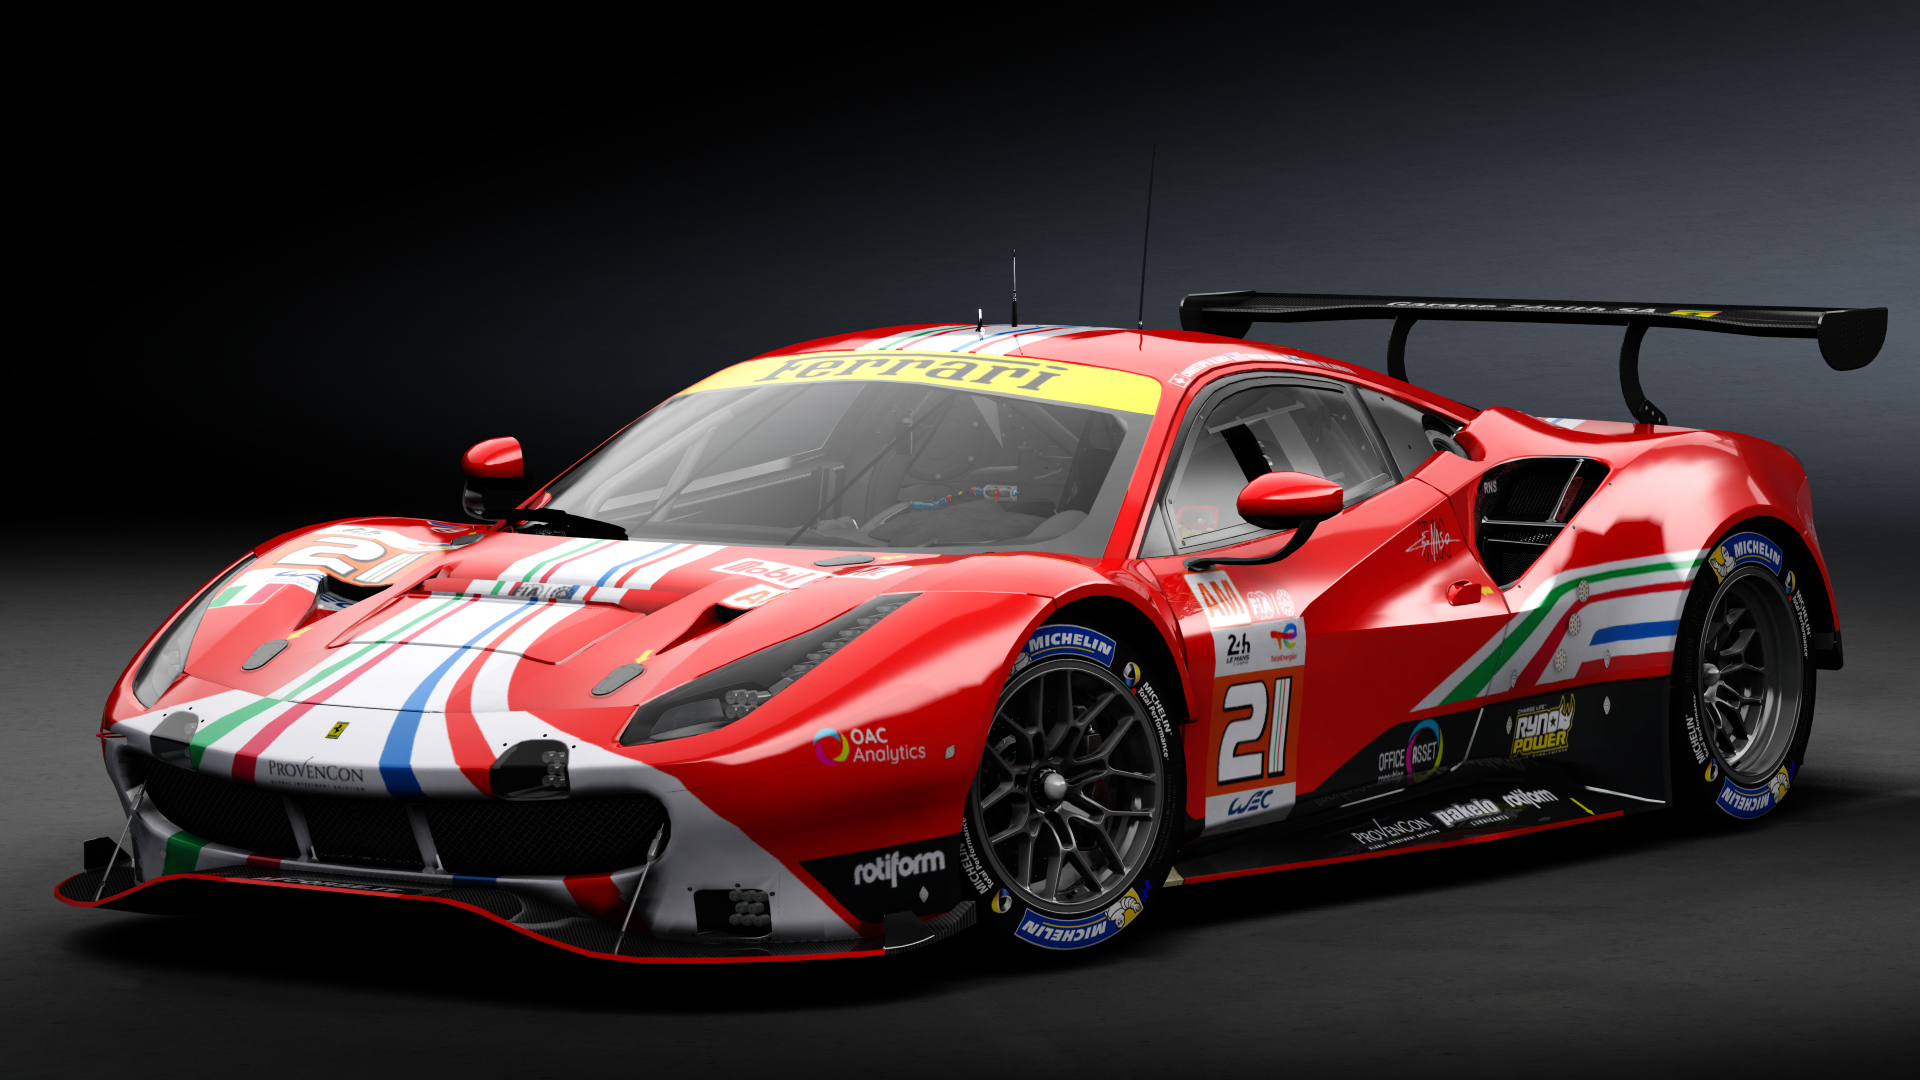 2018 Ferrari 488 GTE Evo Le Mans Spec [Michelotto], skin 2022 #21 AF Corse LM24